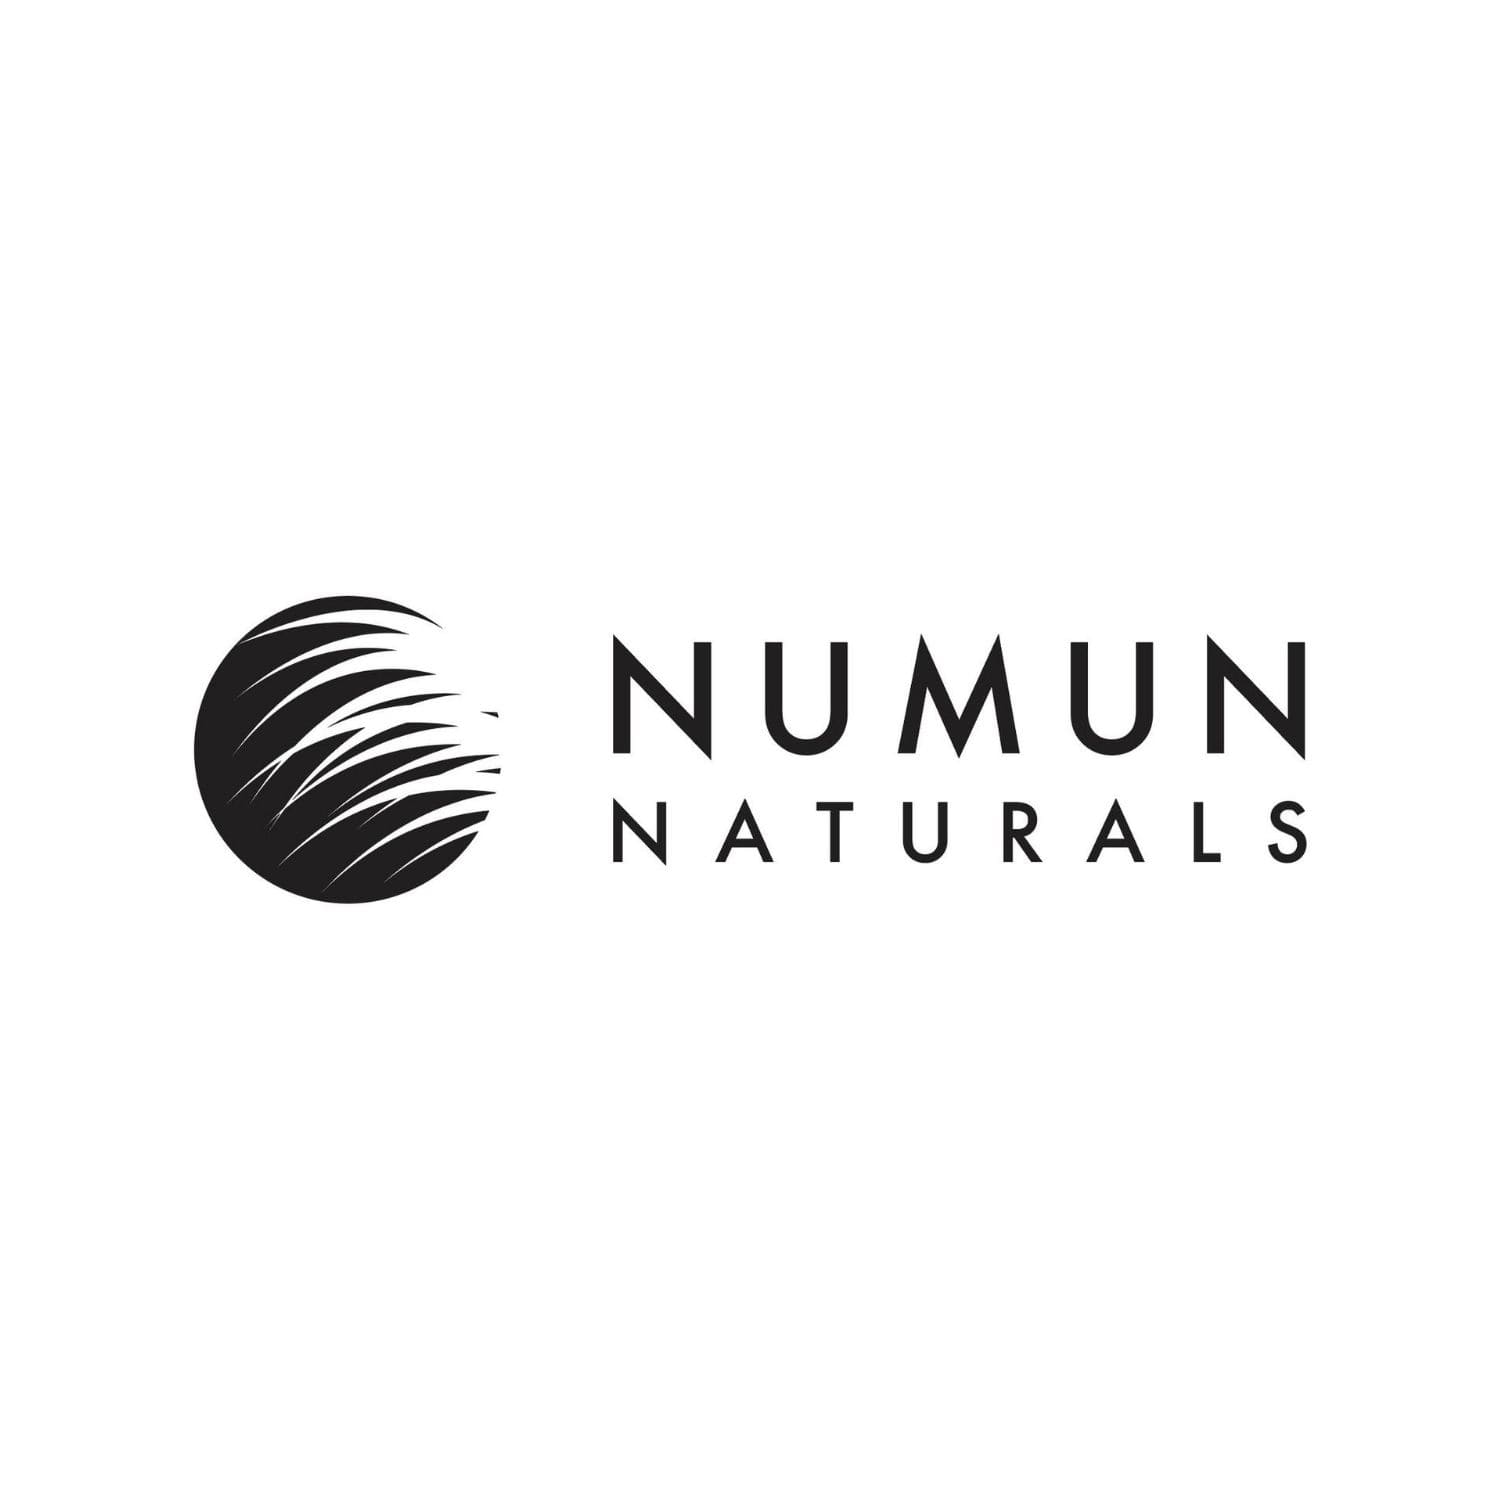 NUMUN NATURALSのロゴ